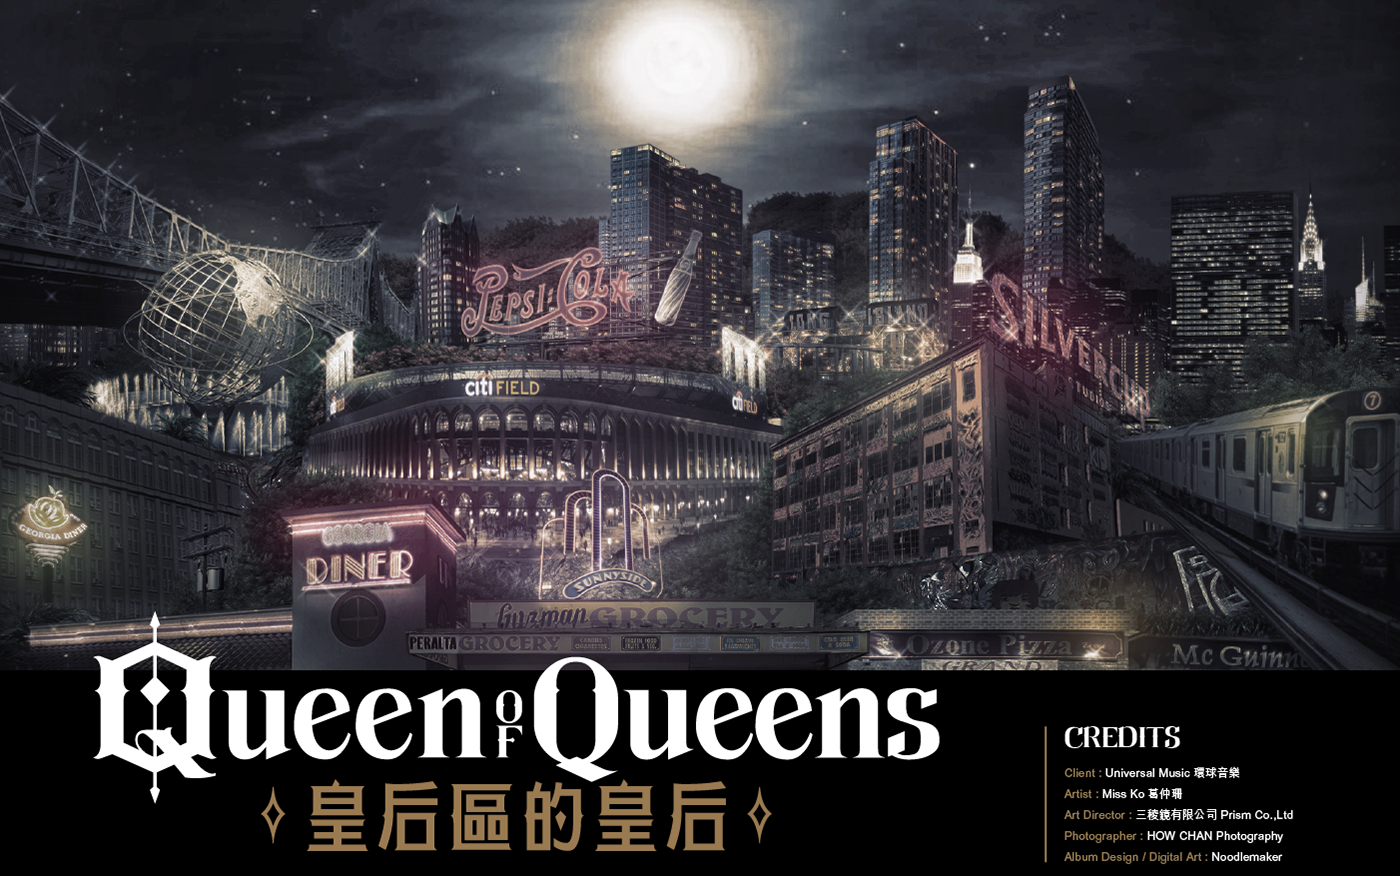 music hiphop taiwan Missko Queens city night Logotype nyc Album